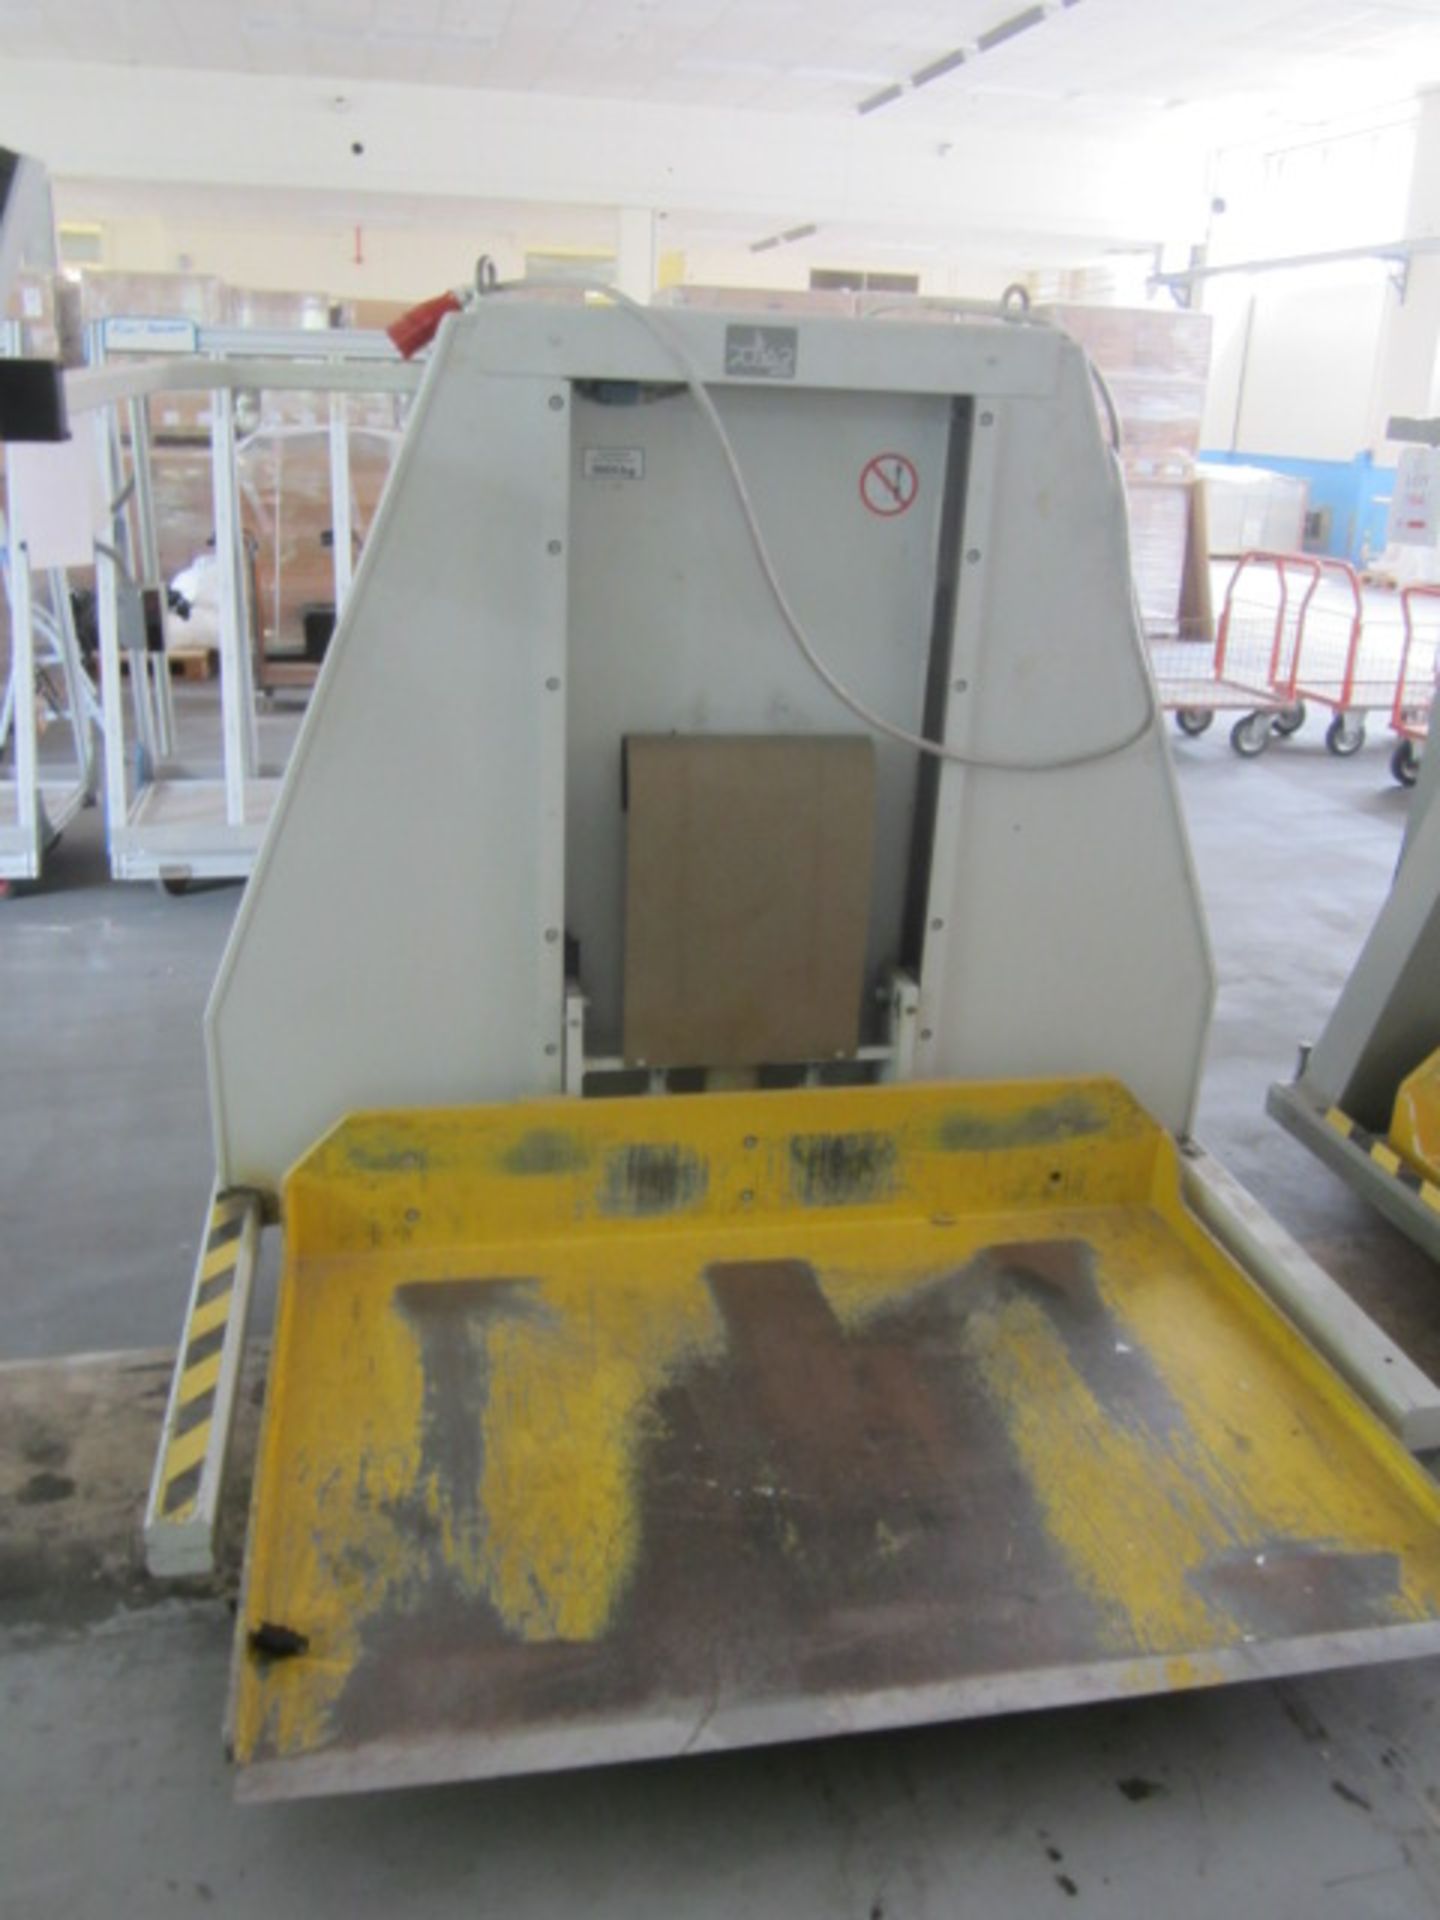 Polar Mohr paper lift, model L100-W-6, machine number 637/2037 (1996), pallet size 1480mm x - Image 3 of 5